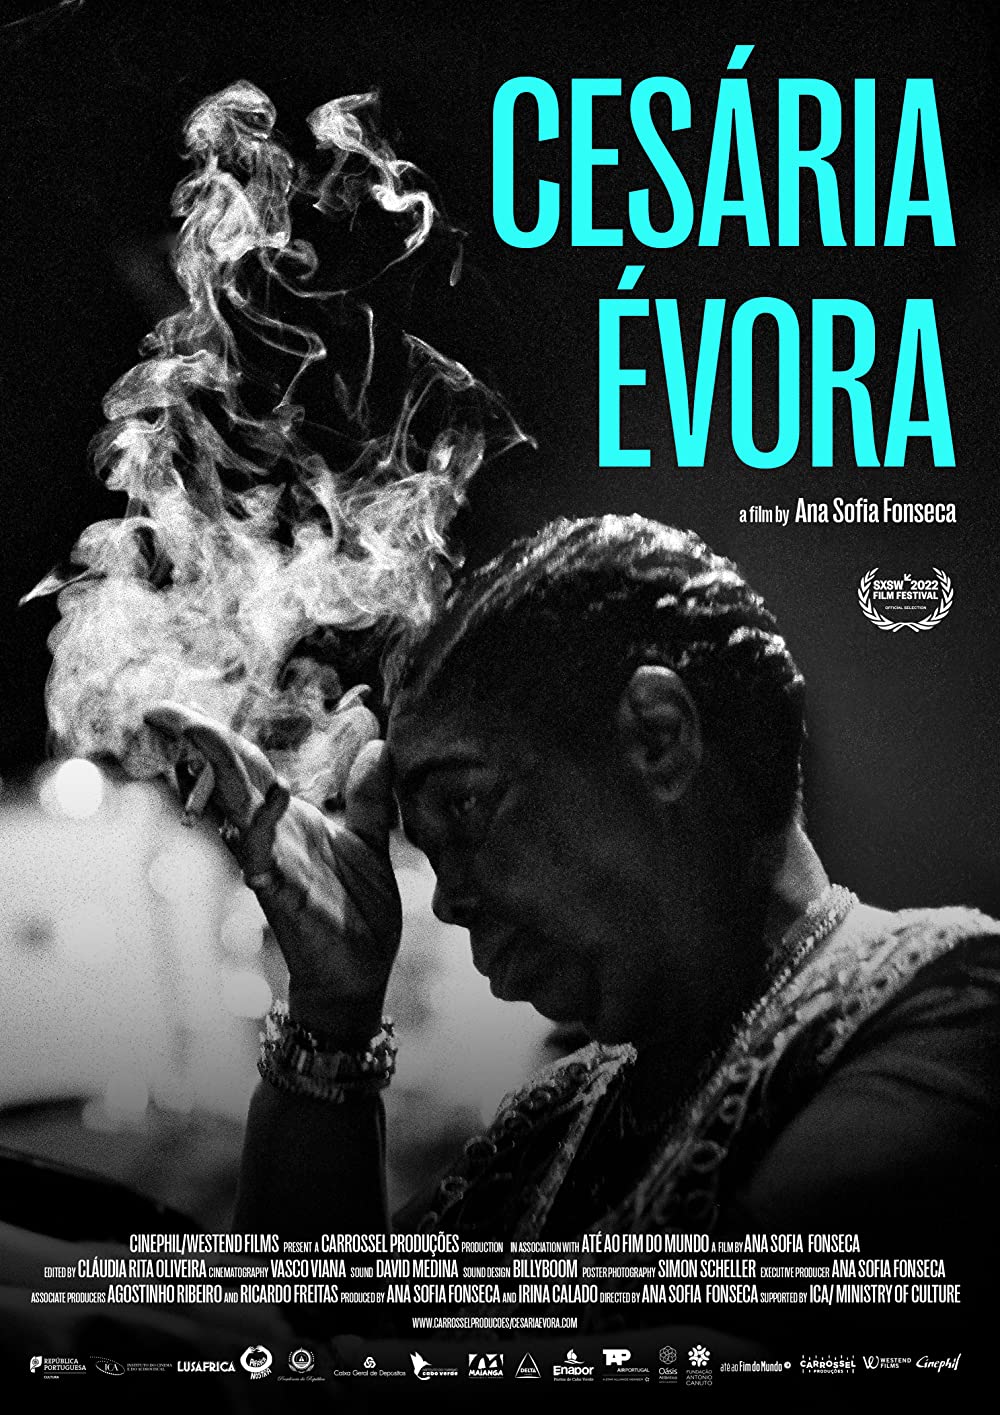 CESARIA EVORA poster